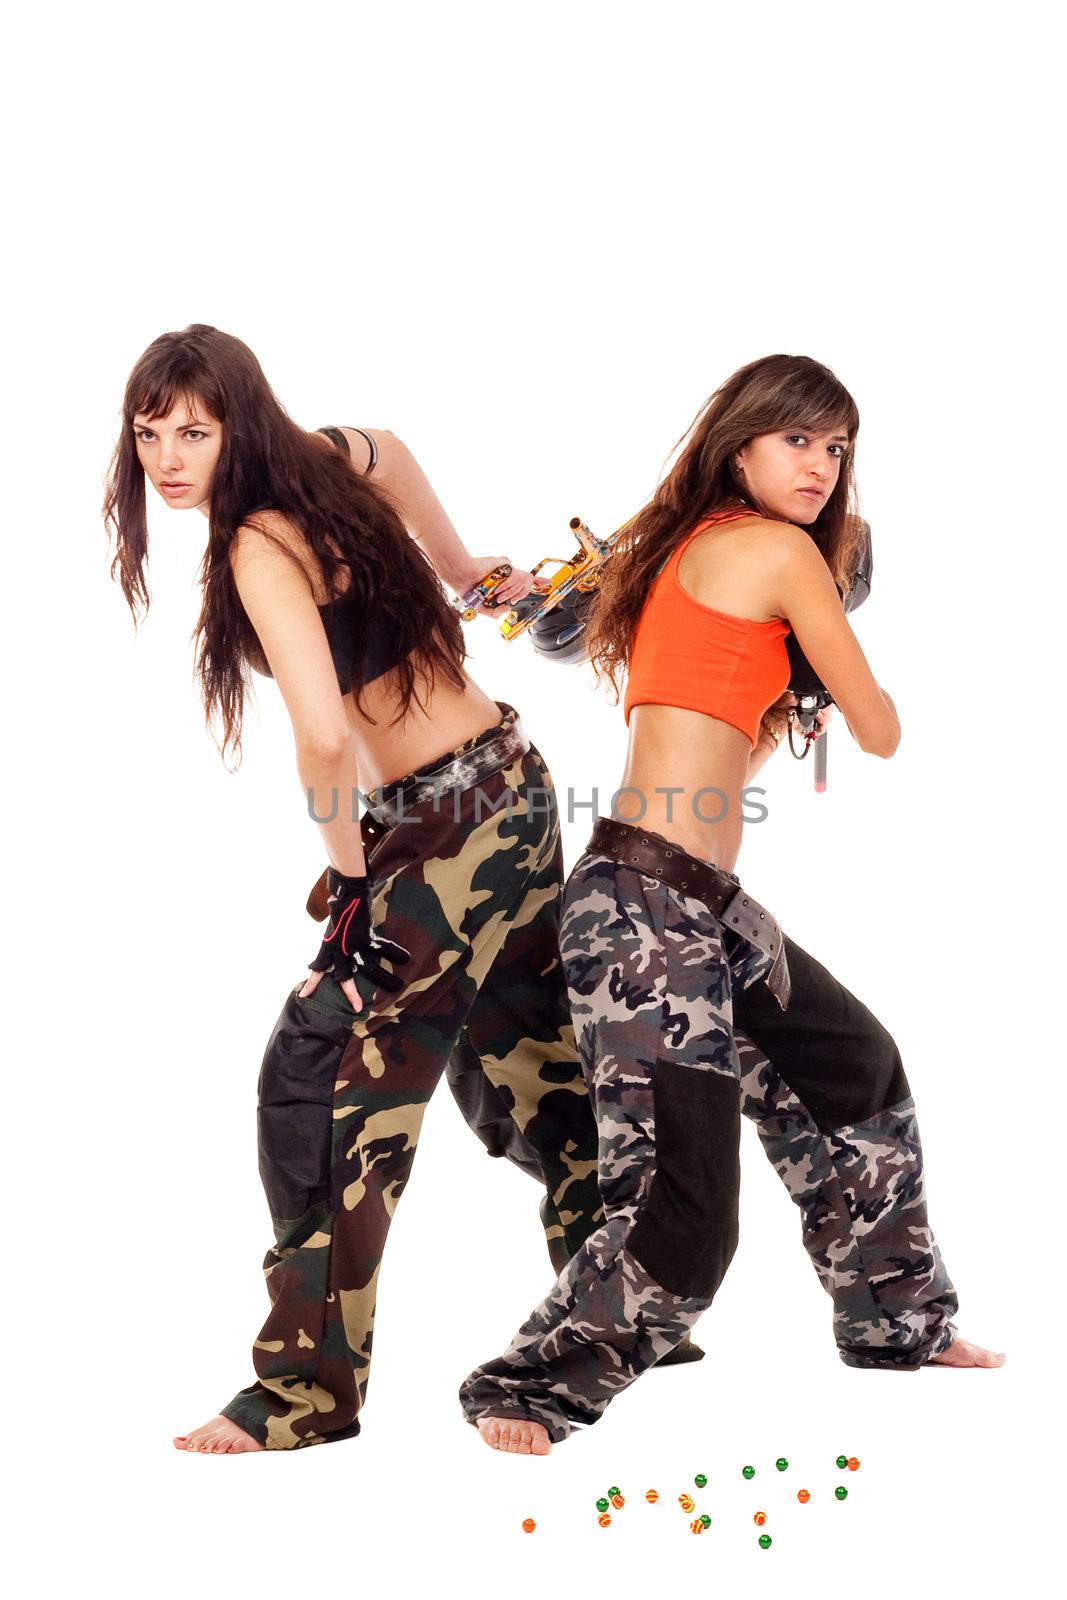 Two young beautiful girls posing like playing paintball